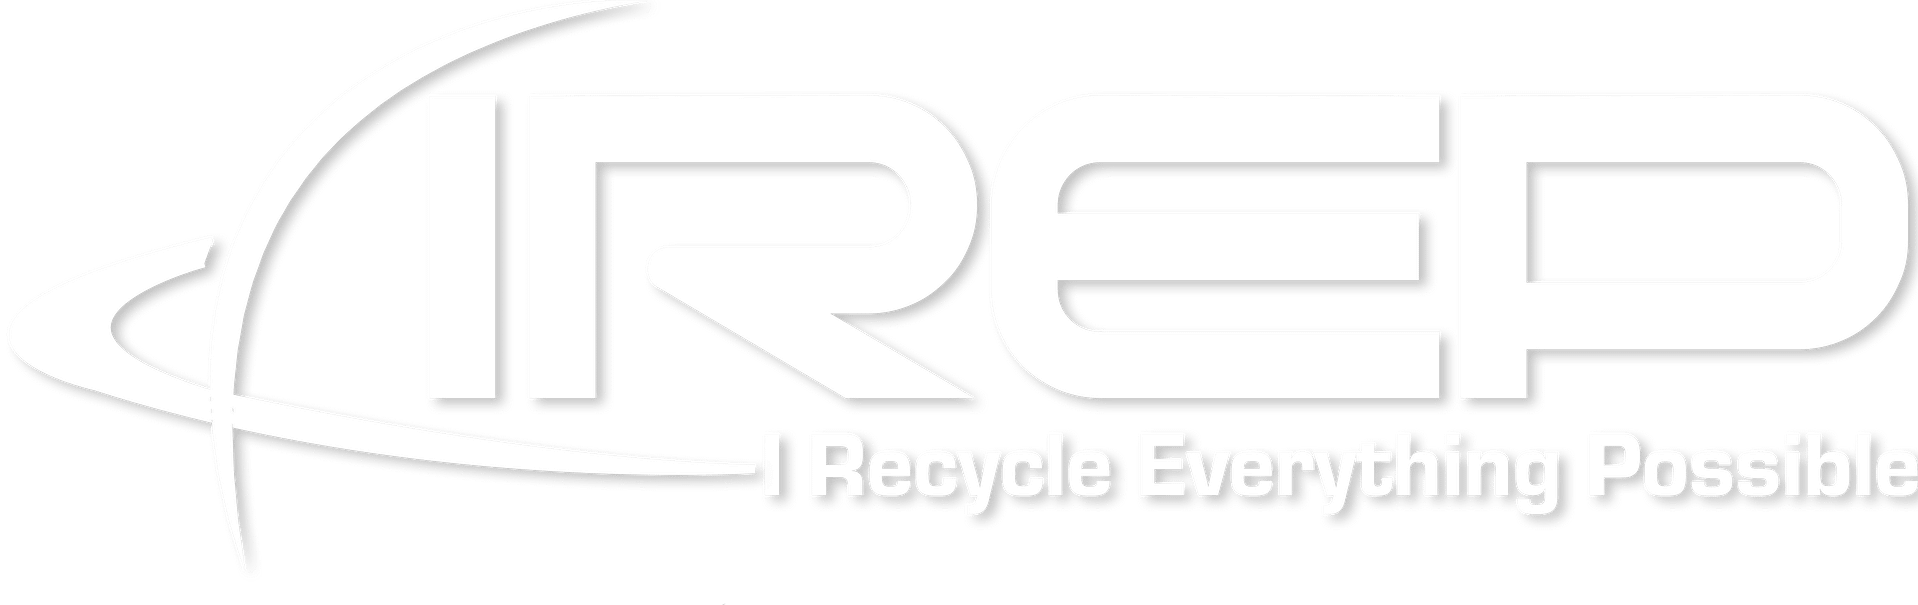 IREP Junk Removal transparent white logo